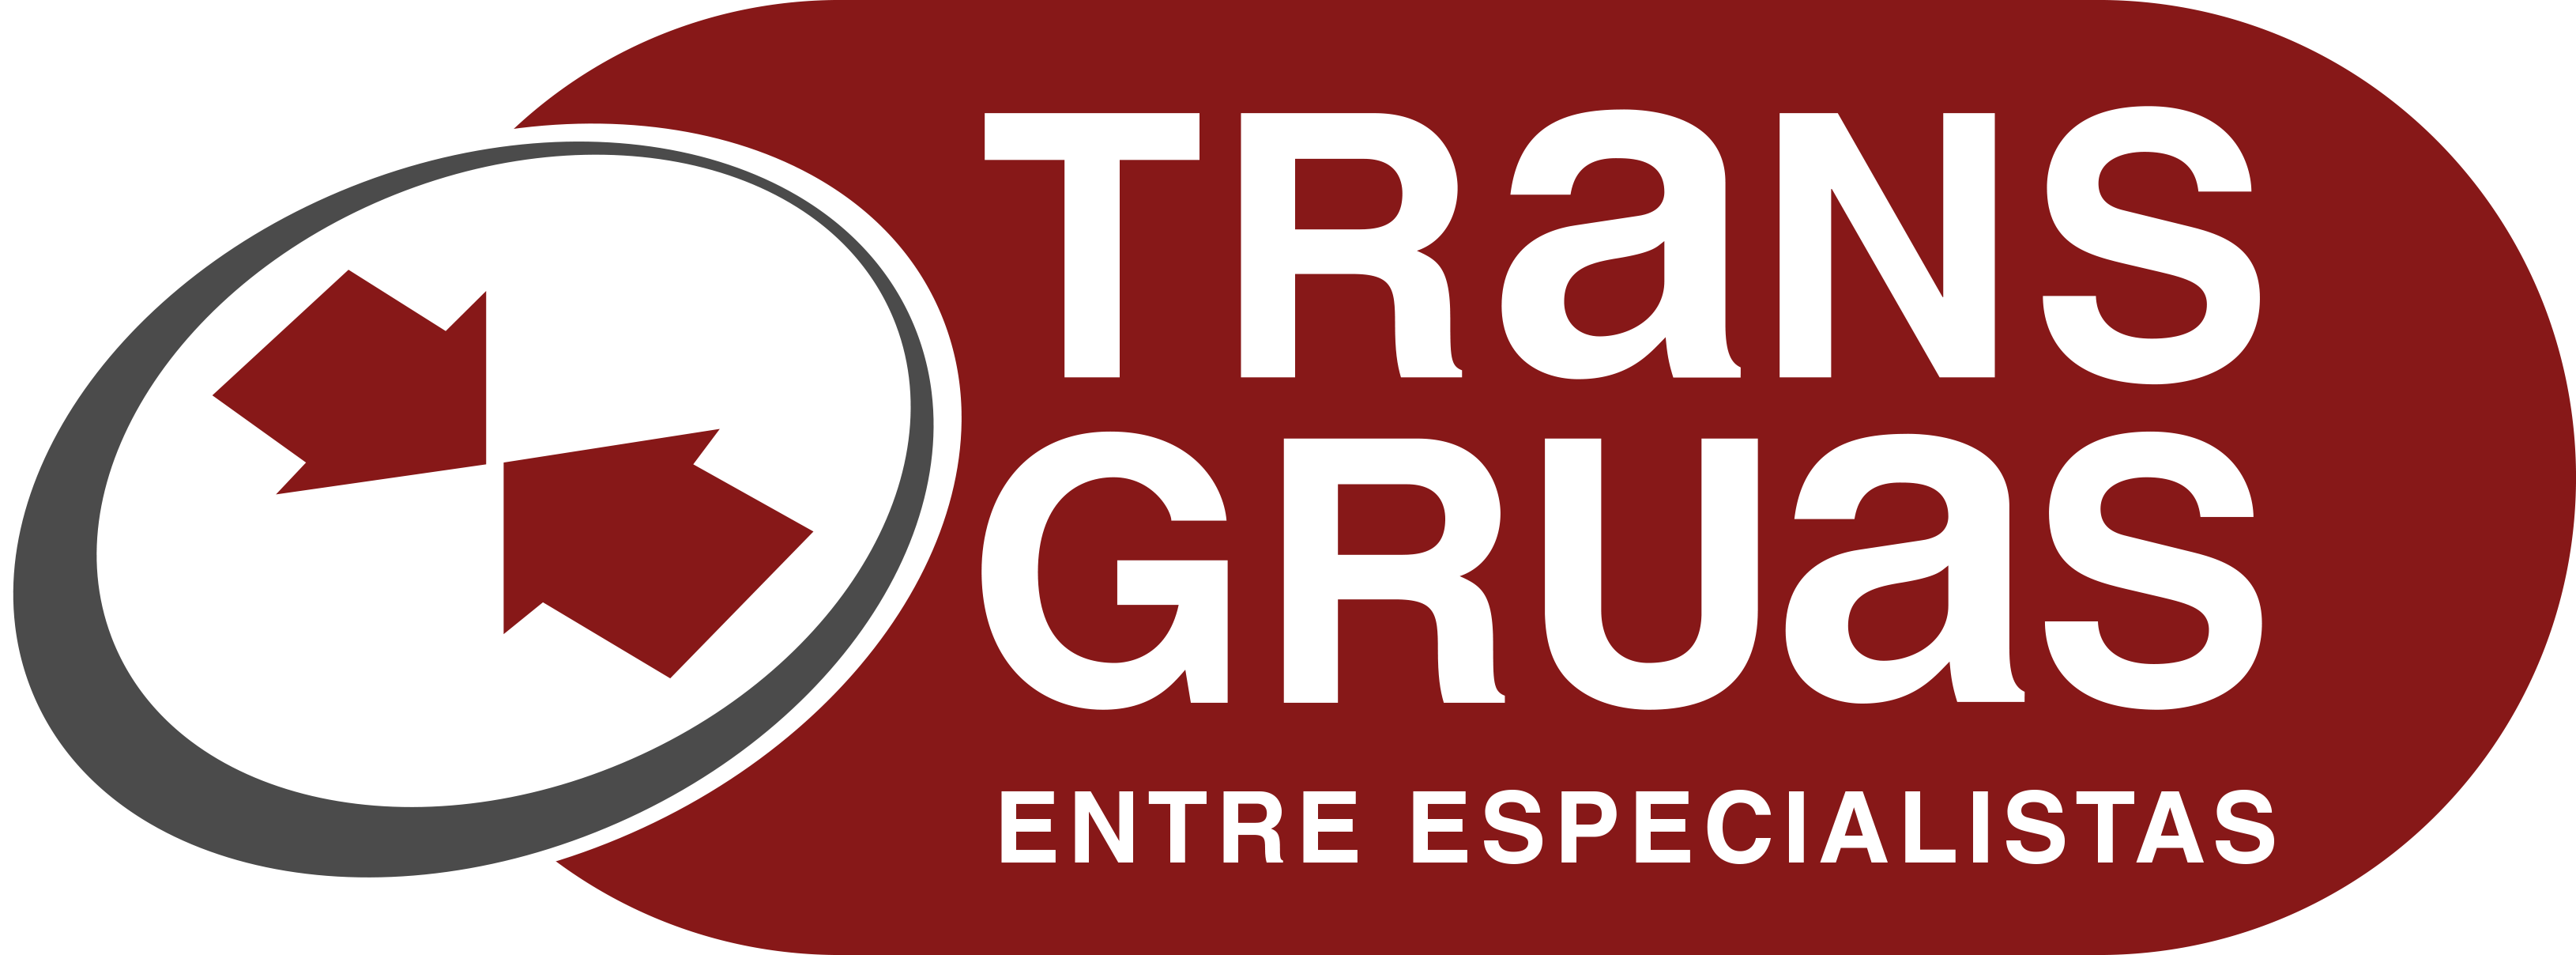 Logotipo Transgruas